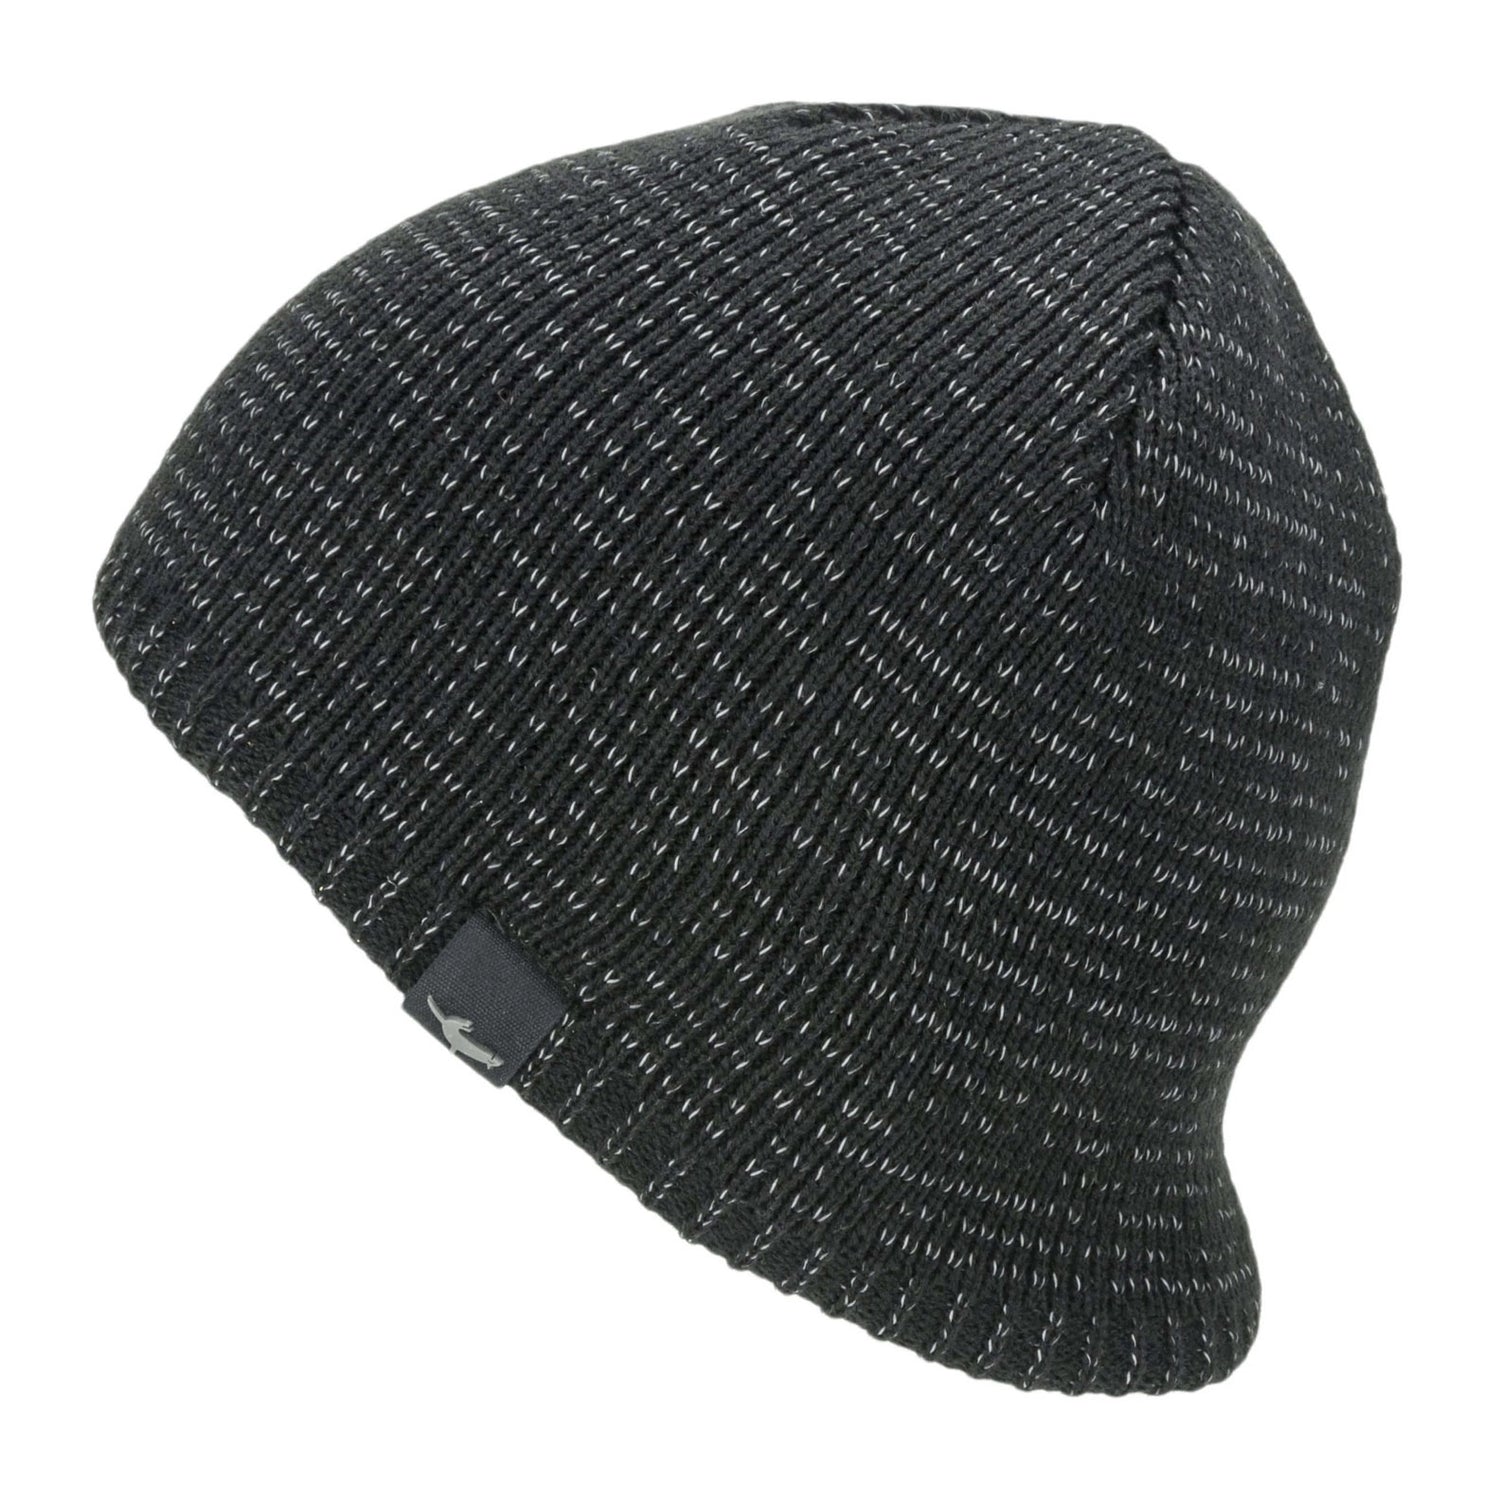 SealSkinz-Waterproof-Cold-Weather-Reflective-Beanie-Hat